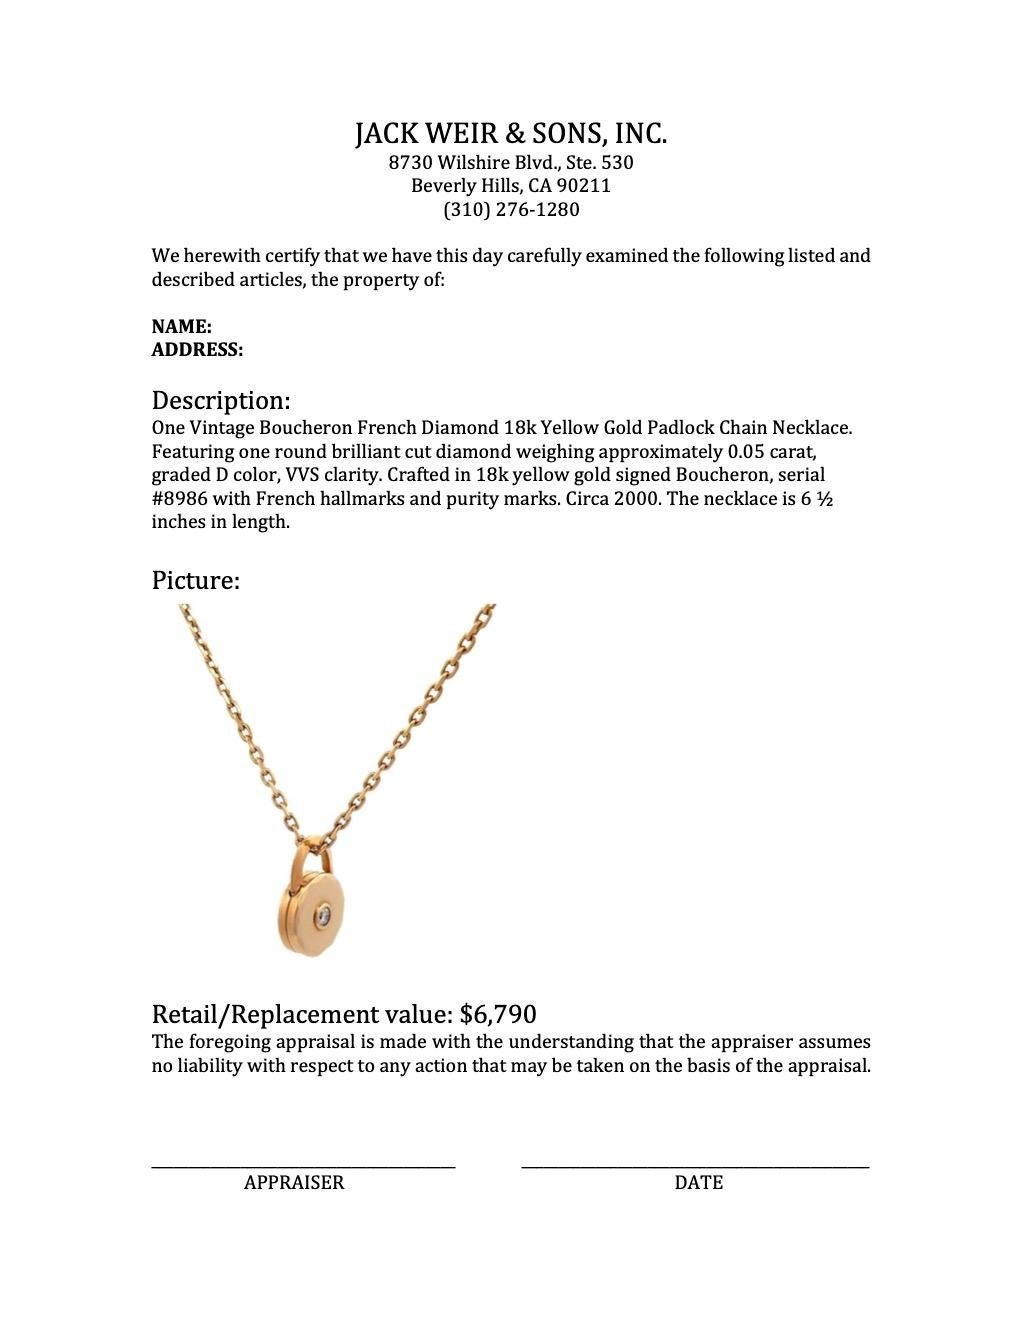 Vintage Boucheron French Diamond 18k Yellow Gold Padlock Chain Necklace 2